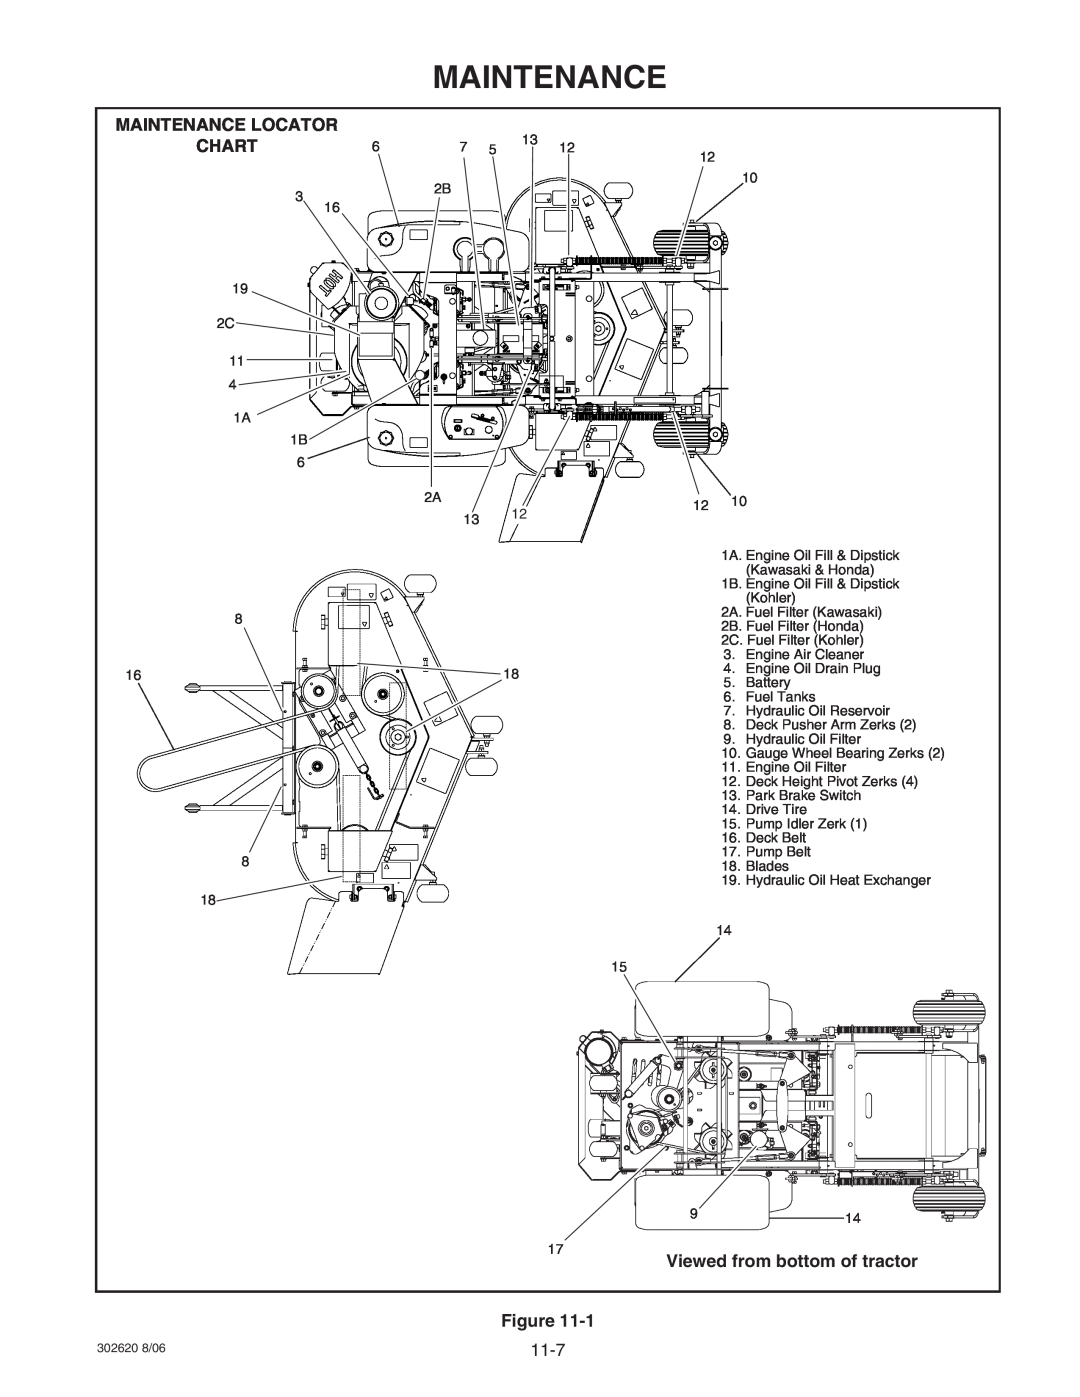 Hustler Turf Super Mini Z manual Maintenance Locator Chart, Viewed from bottom of tractor, 11-7 